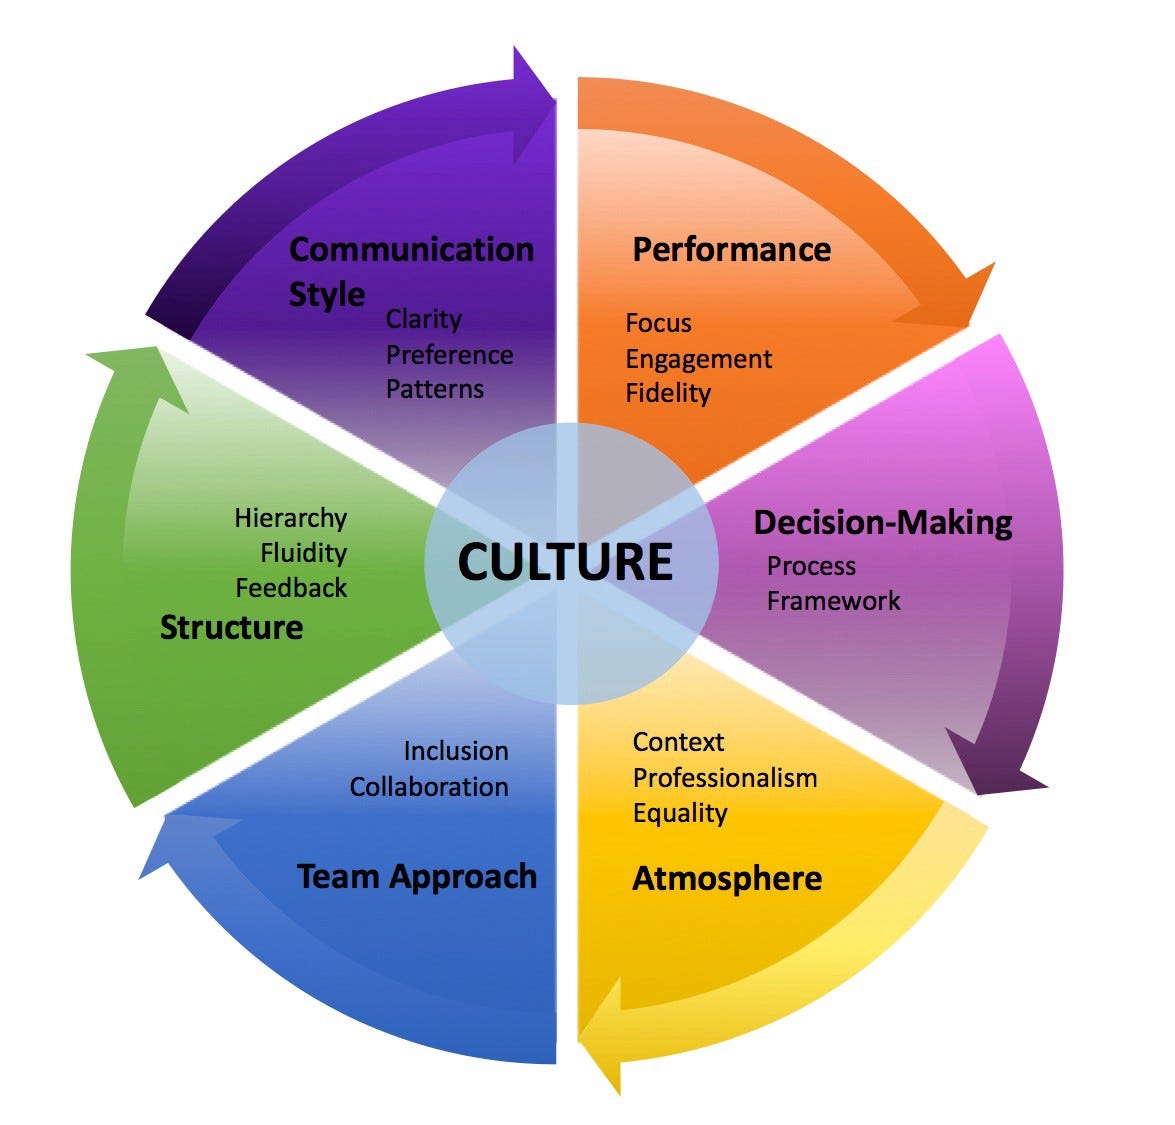 research organizational culture definition